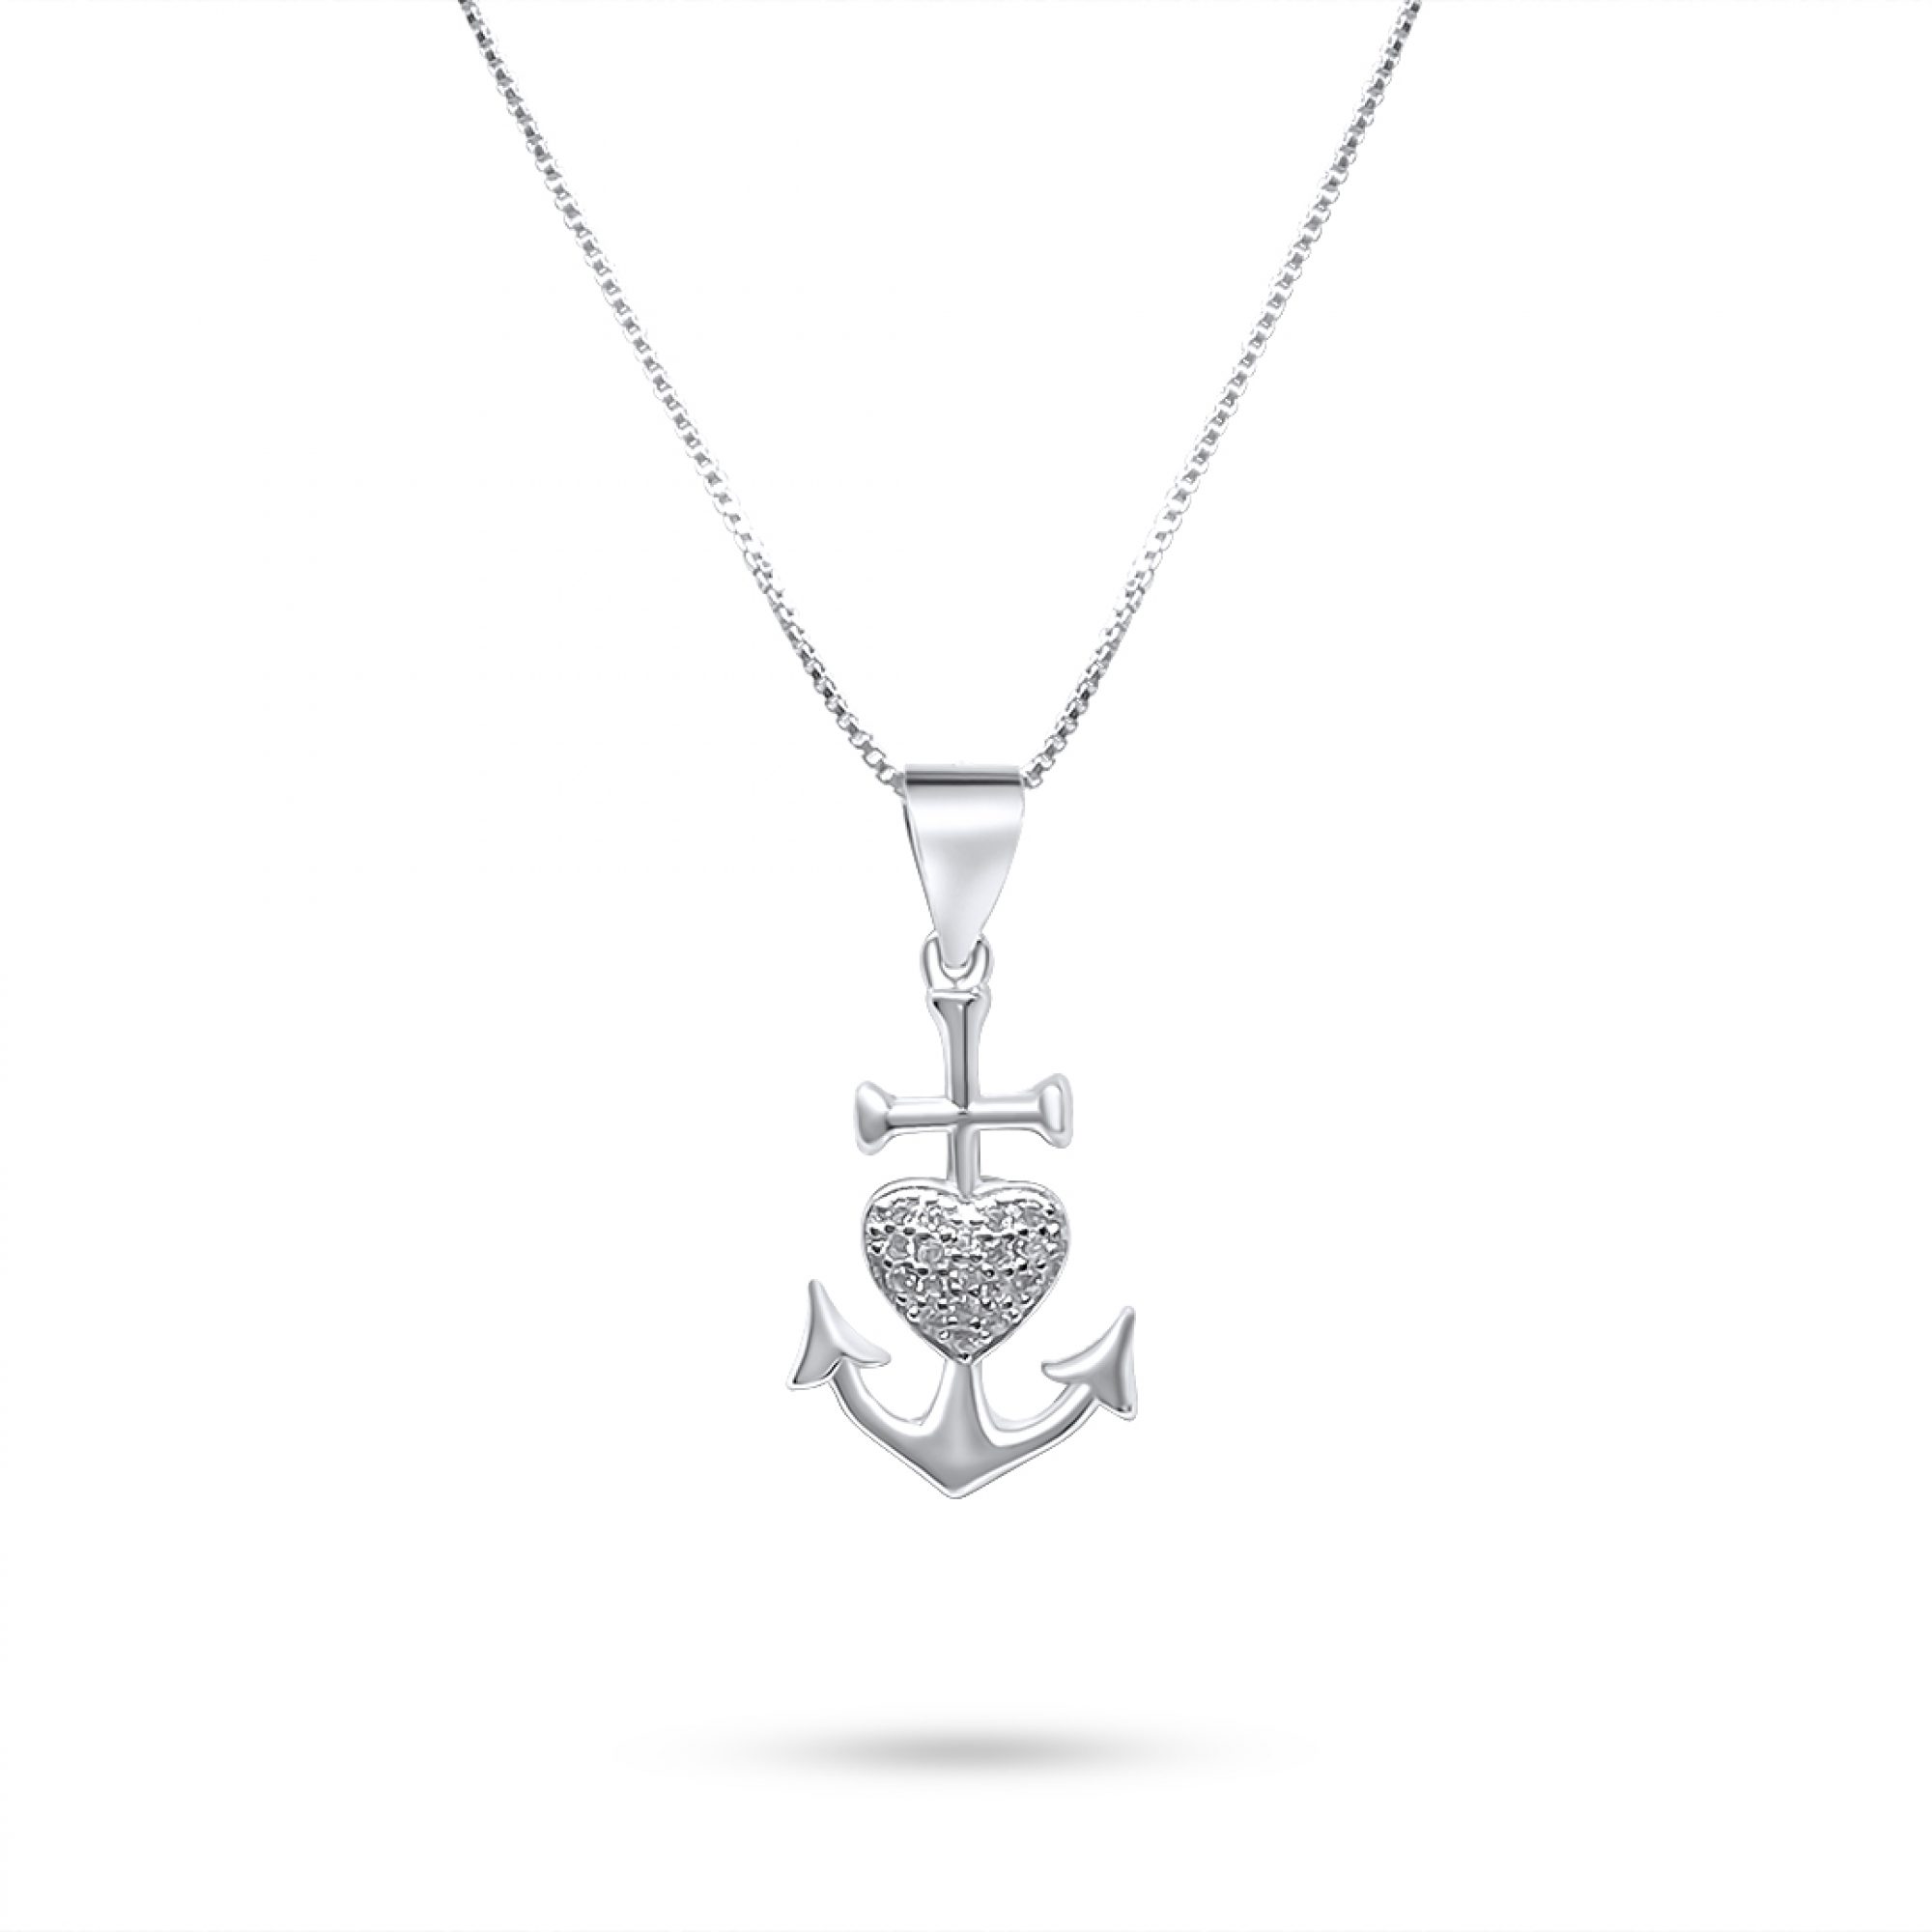 Anchor necklace with zircon stones